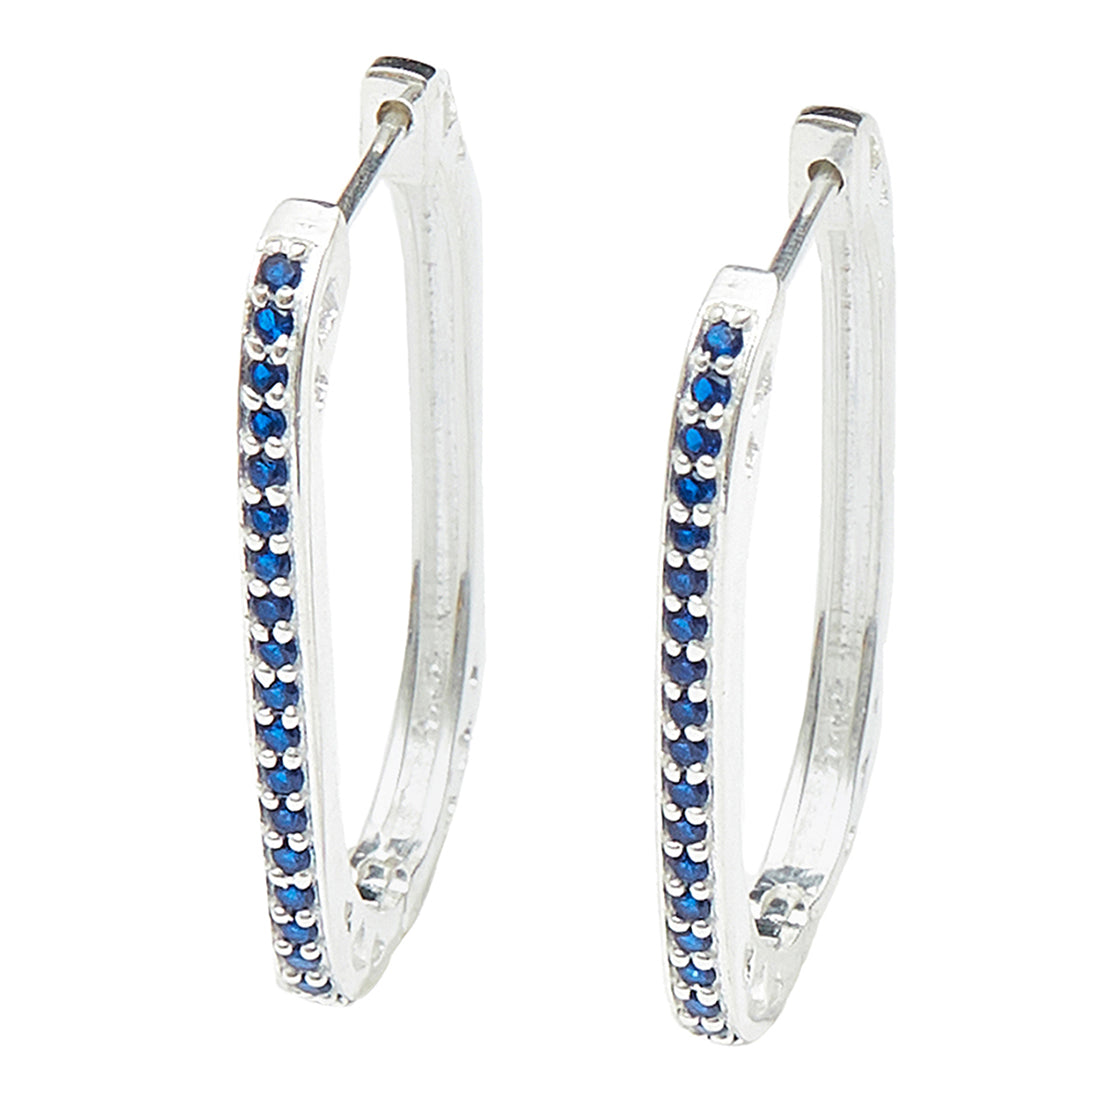 Women's Blue Cz Stone Square Hoop Earring Set In 925 Sterling Silver - Voylla